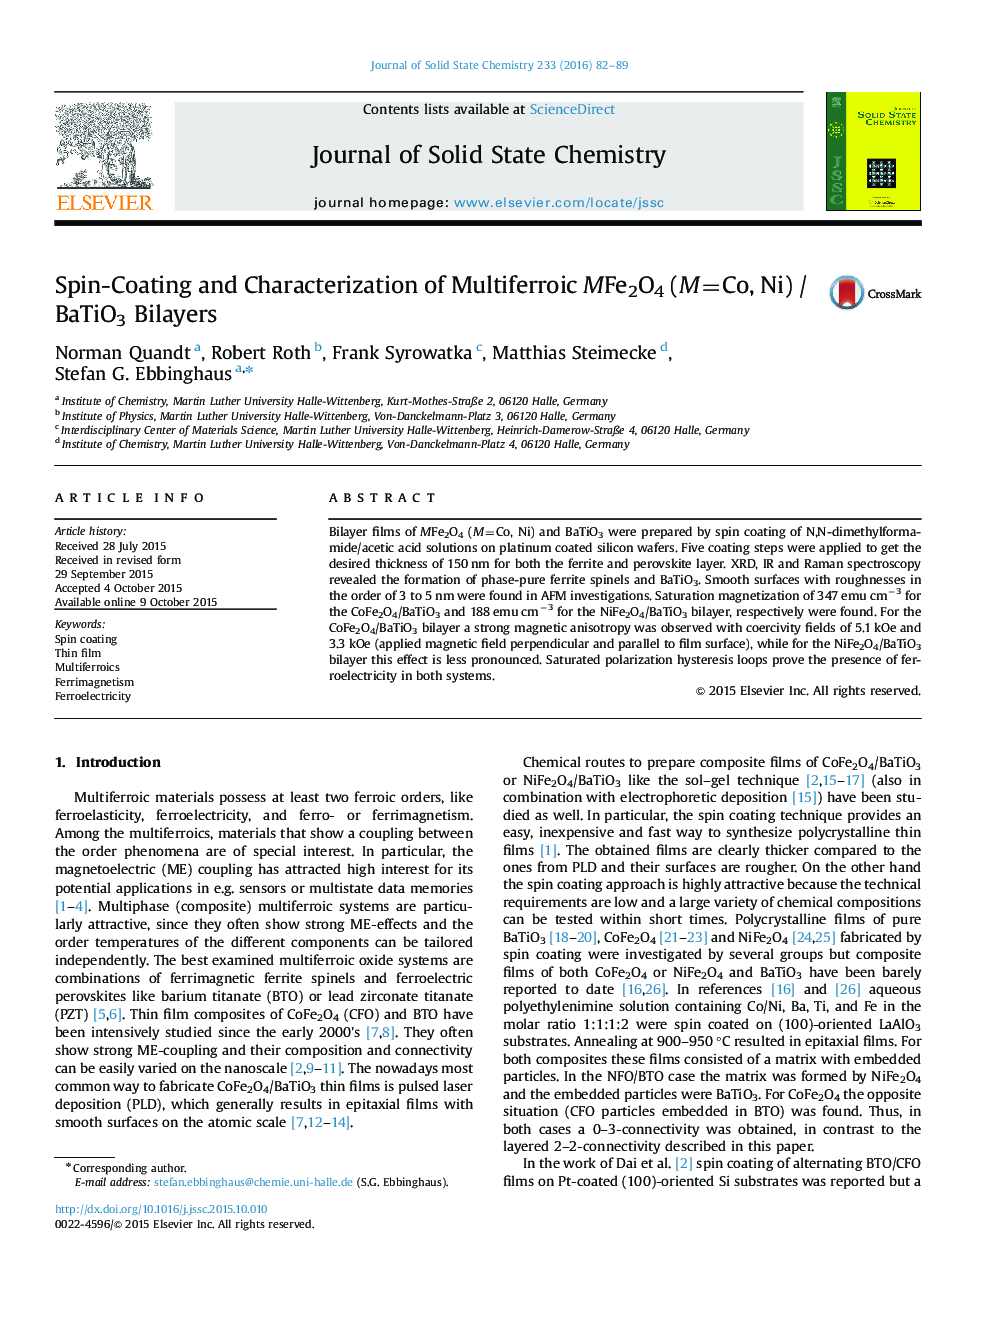 Spin-Coating and Characterization of Multiferroic MFe2O4 (M=Co, Ni) / BaTiO3 Bilayers